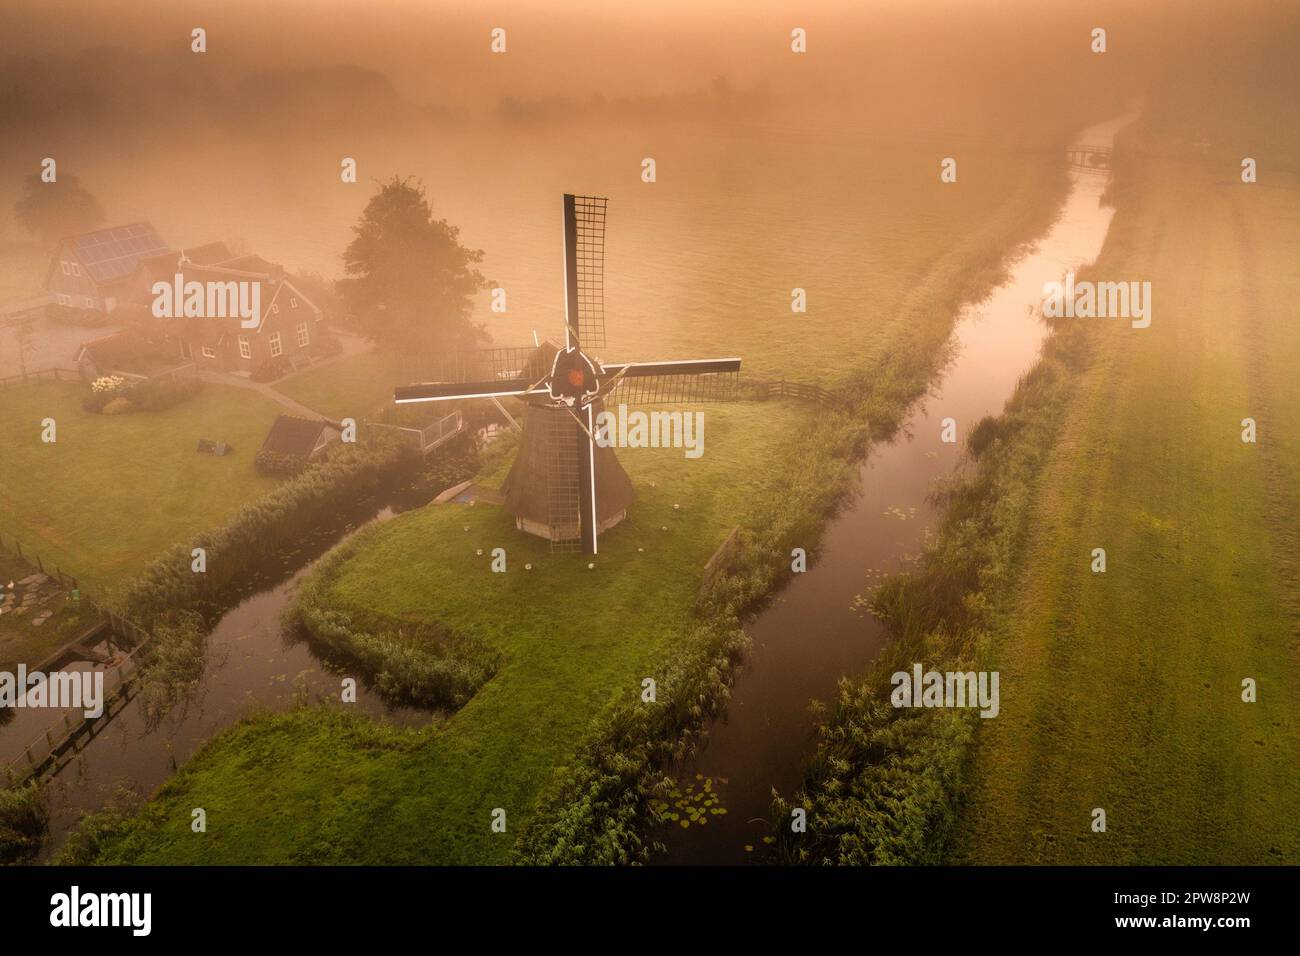 Niederlande, Aldtsjerk, Oudkerk, Windmill De Hoop (The Hope). Sonnenaufgang. Nebel. Luftaufnahme. Stockfoto